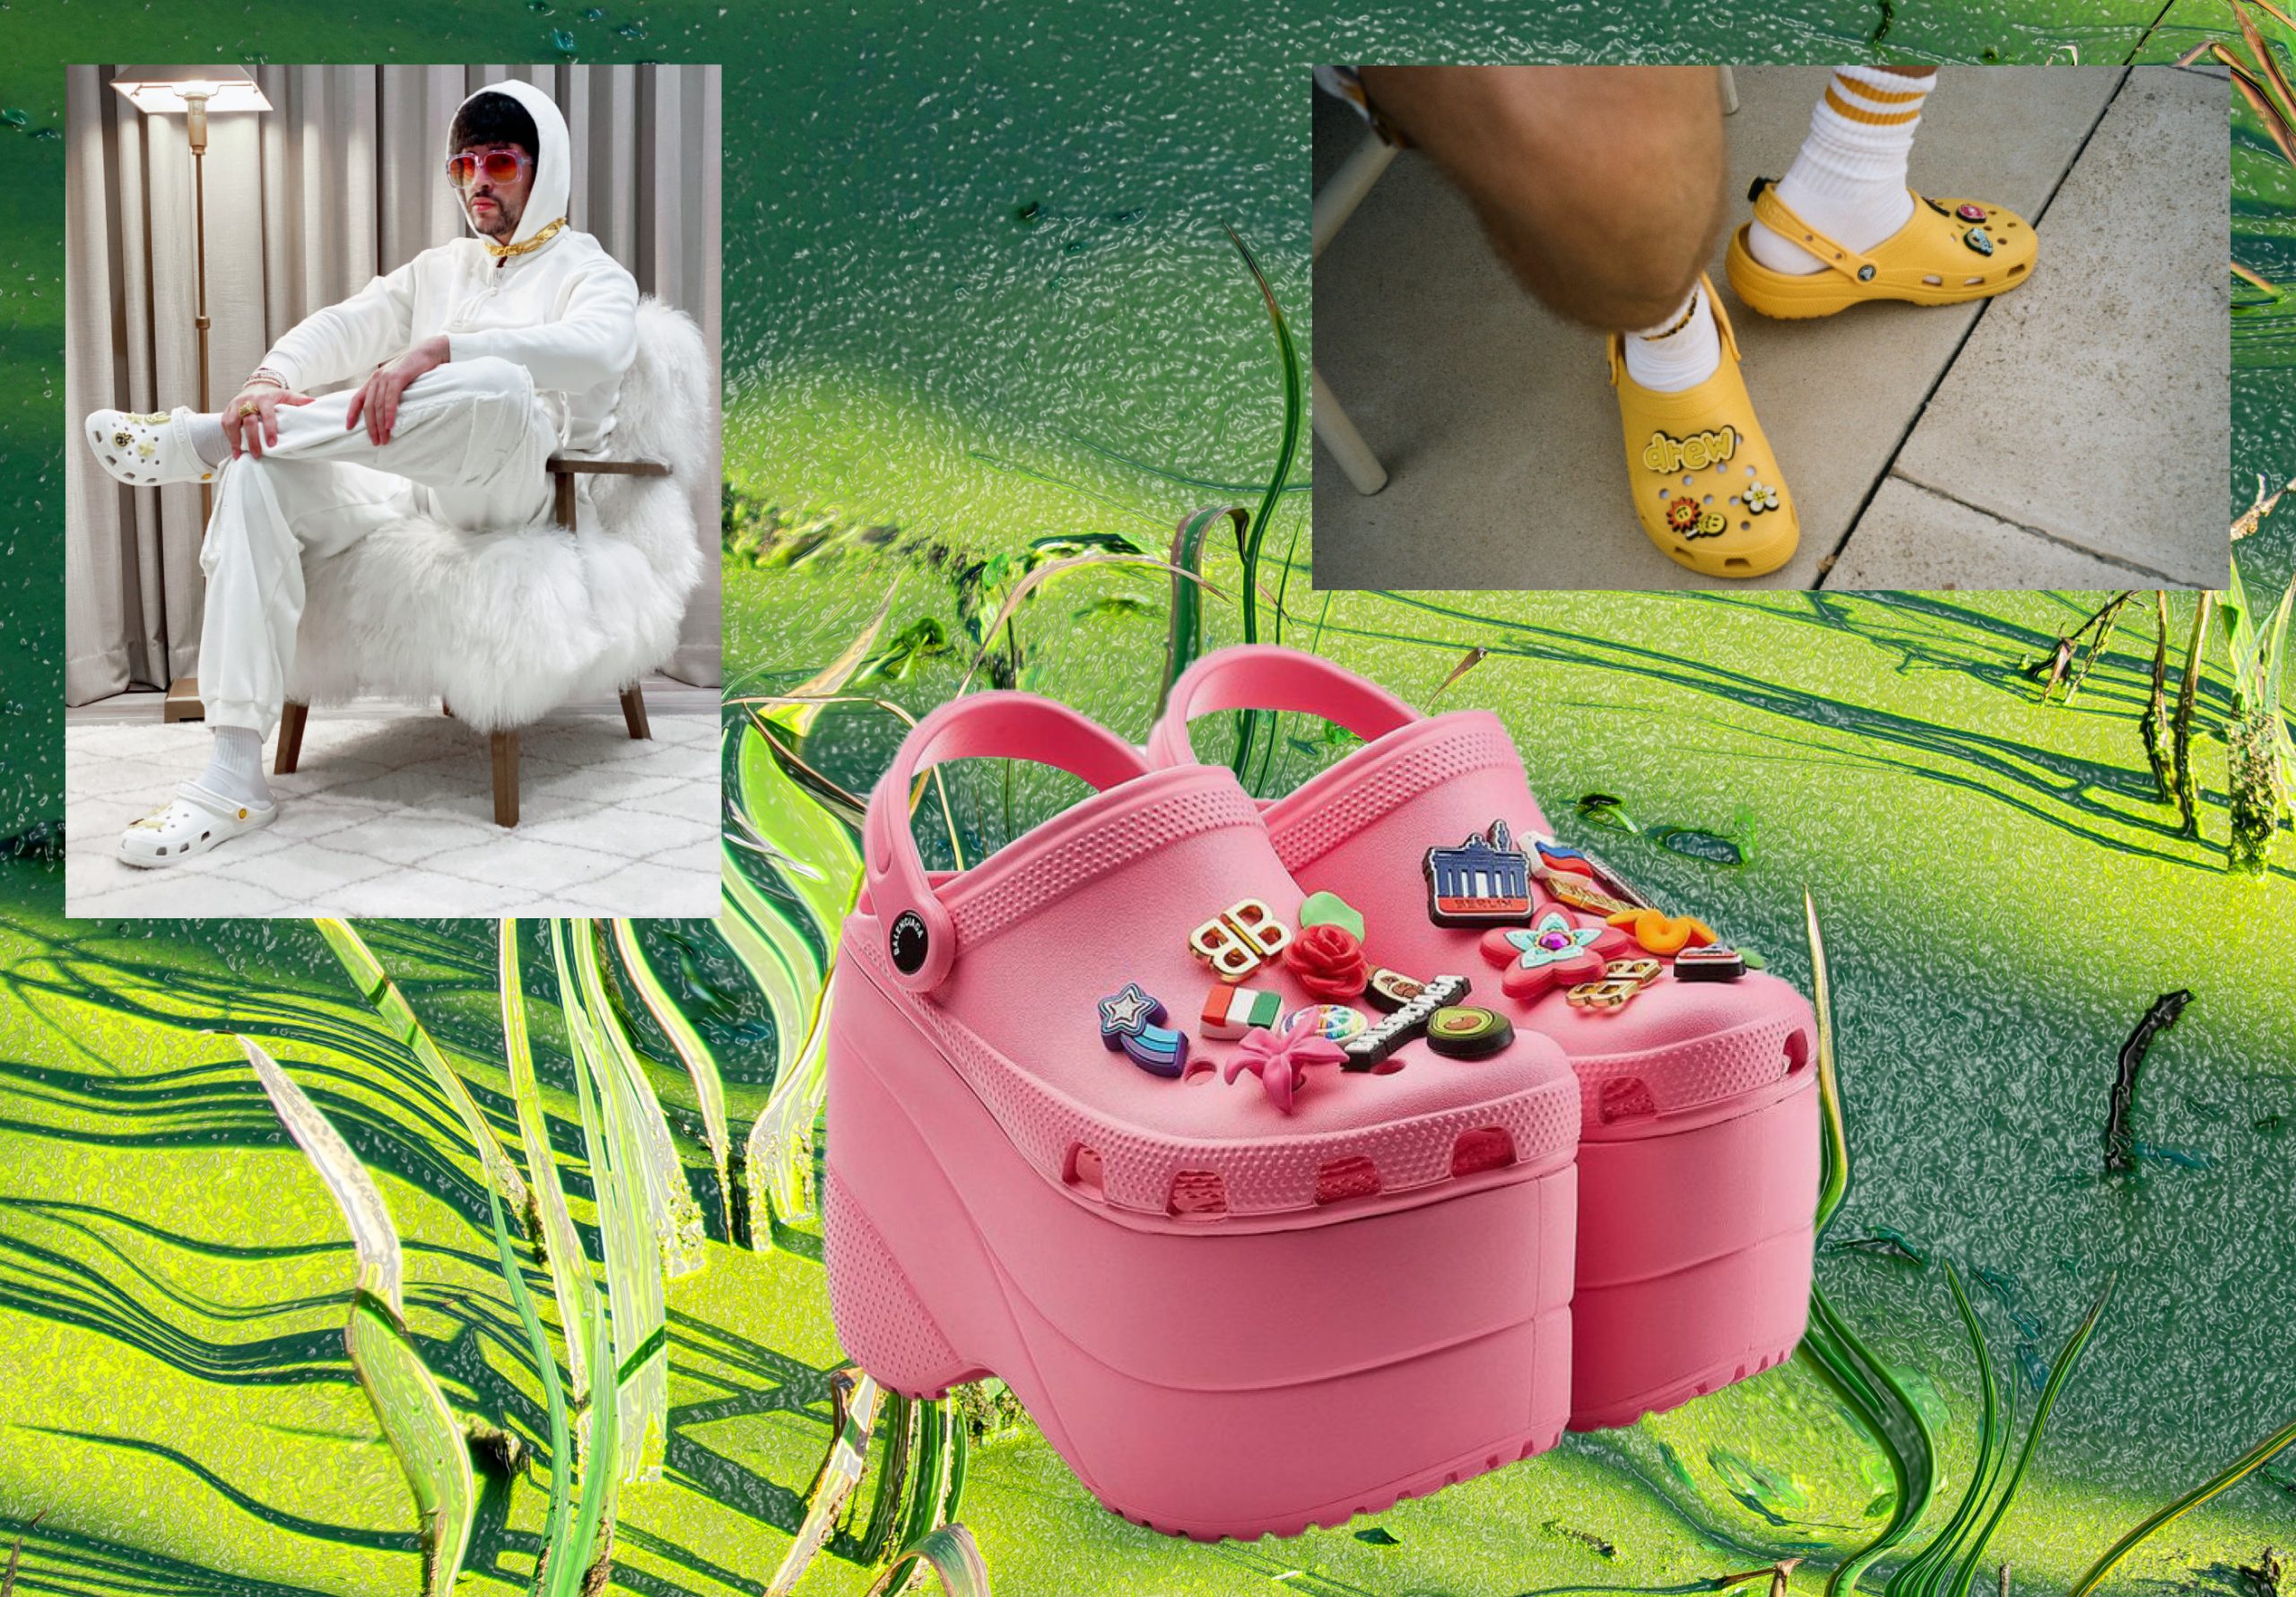 How to Wear Crocs, According to Nicki Minaj, Bad Bunny, Post